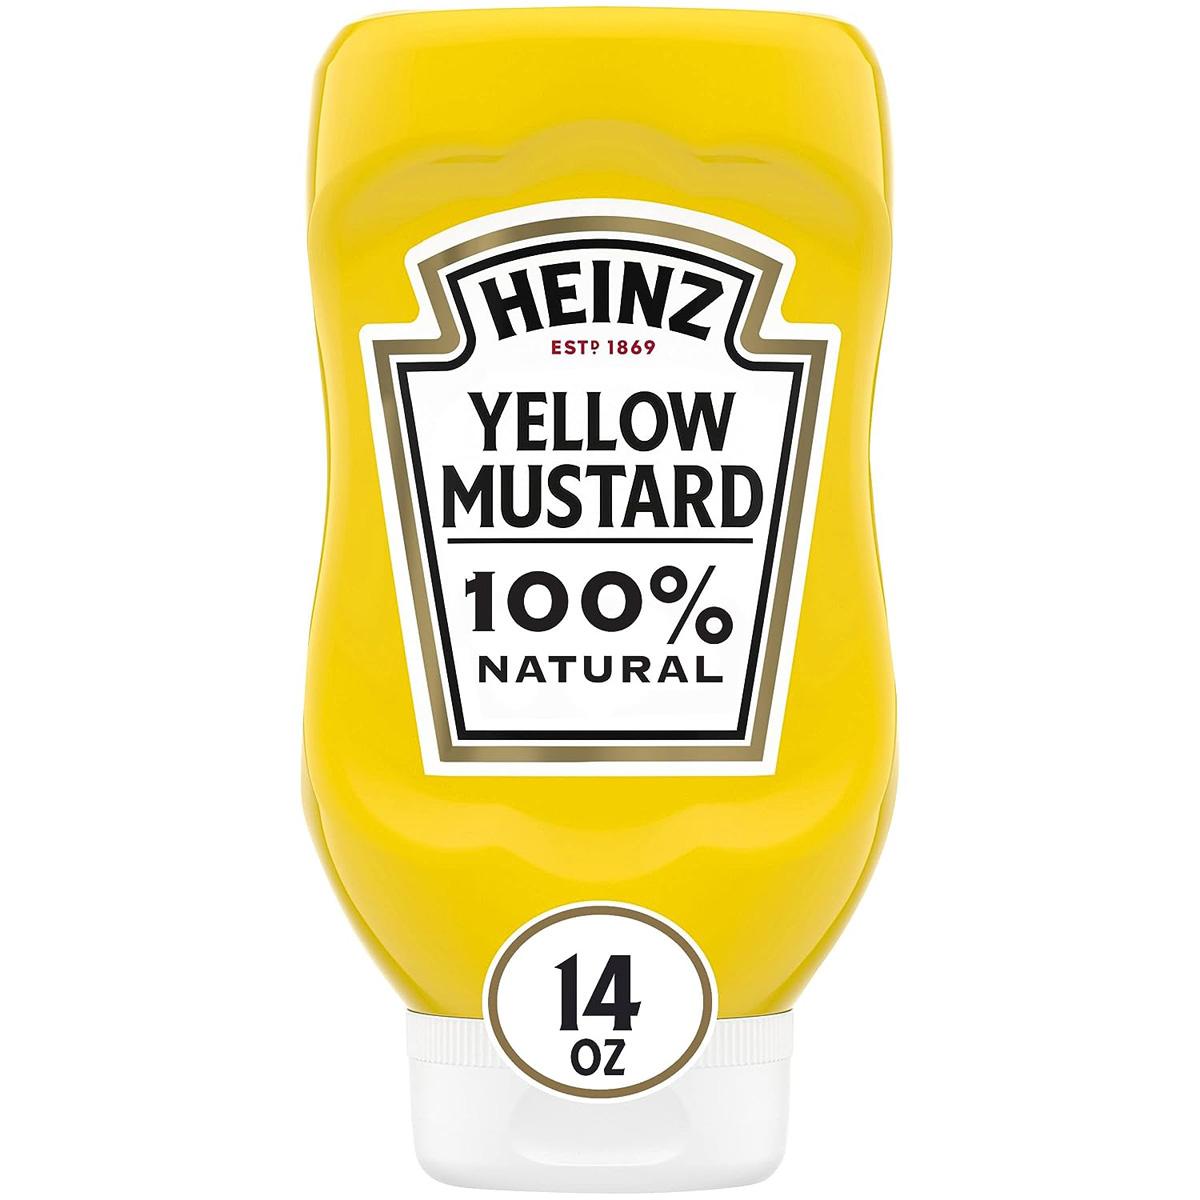 Heinz Yellow Mustard for $1.49